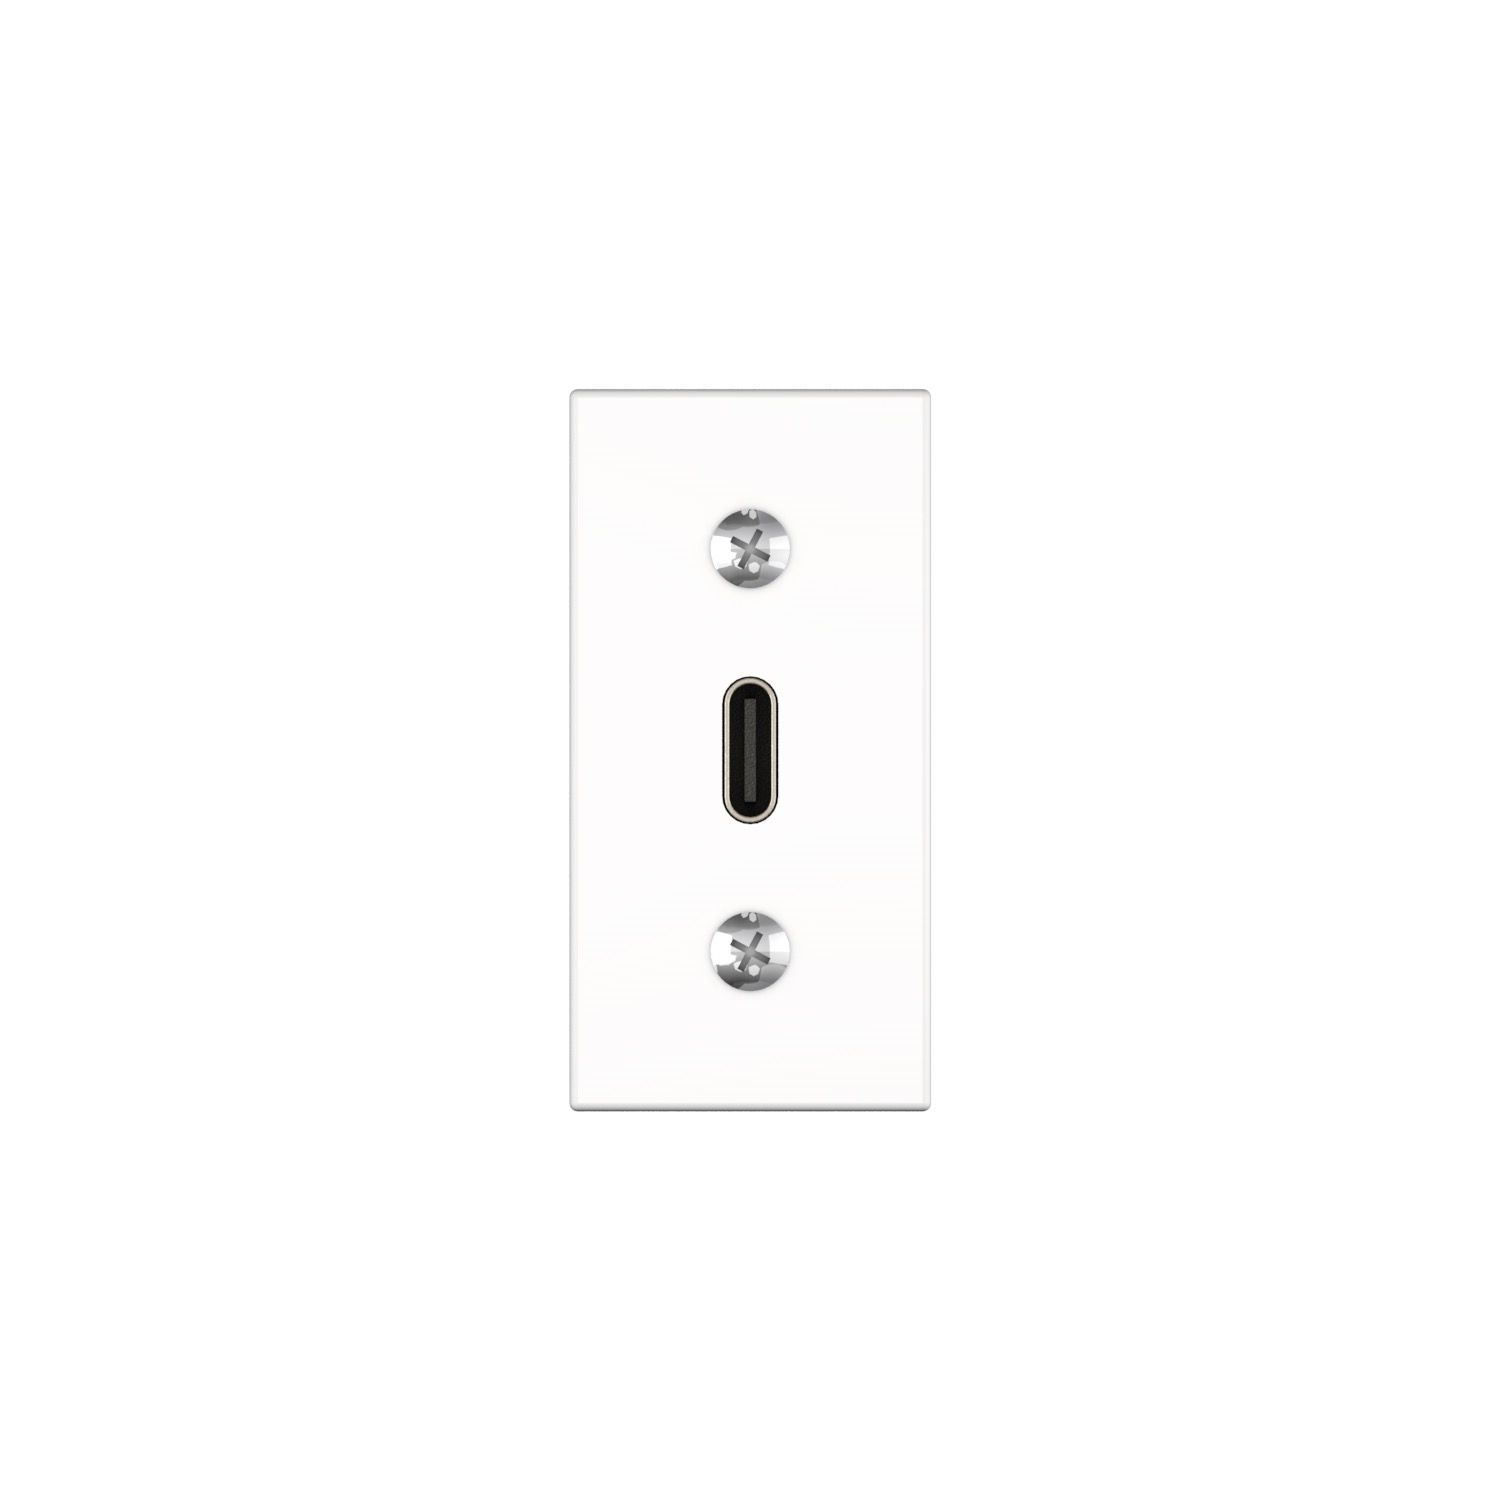 Kindermann Konnect flex 45 click Anschlussblende USB C 3.1 (f/m) - Halbblende - Weiß